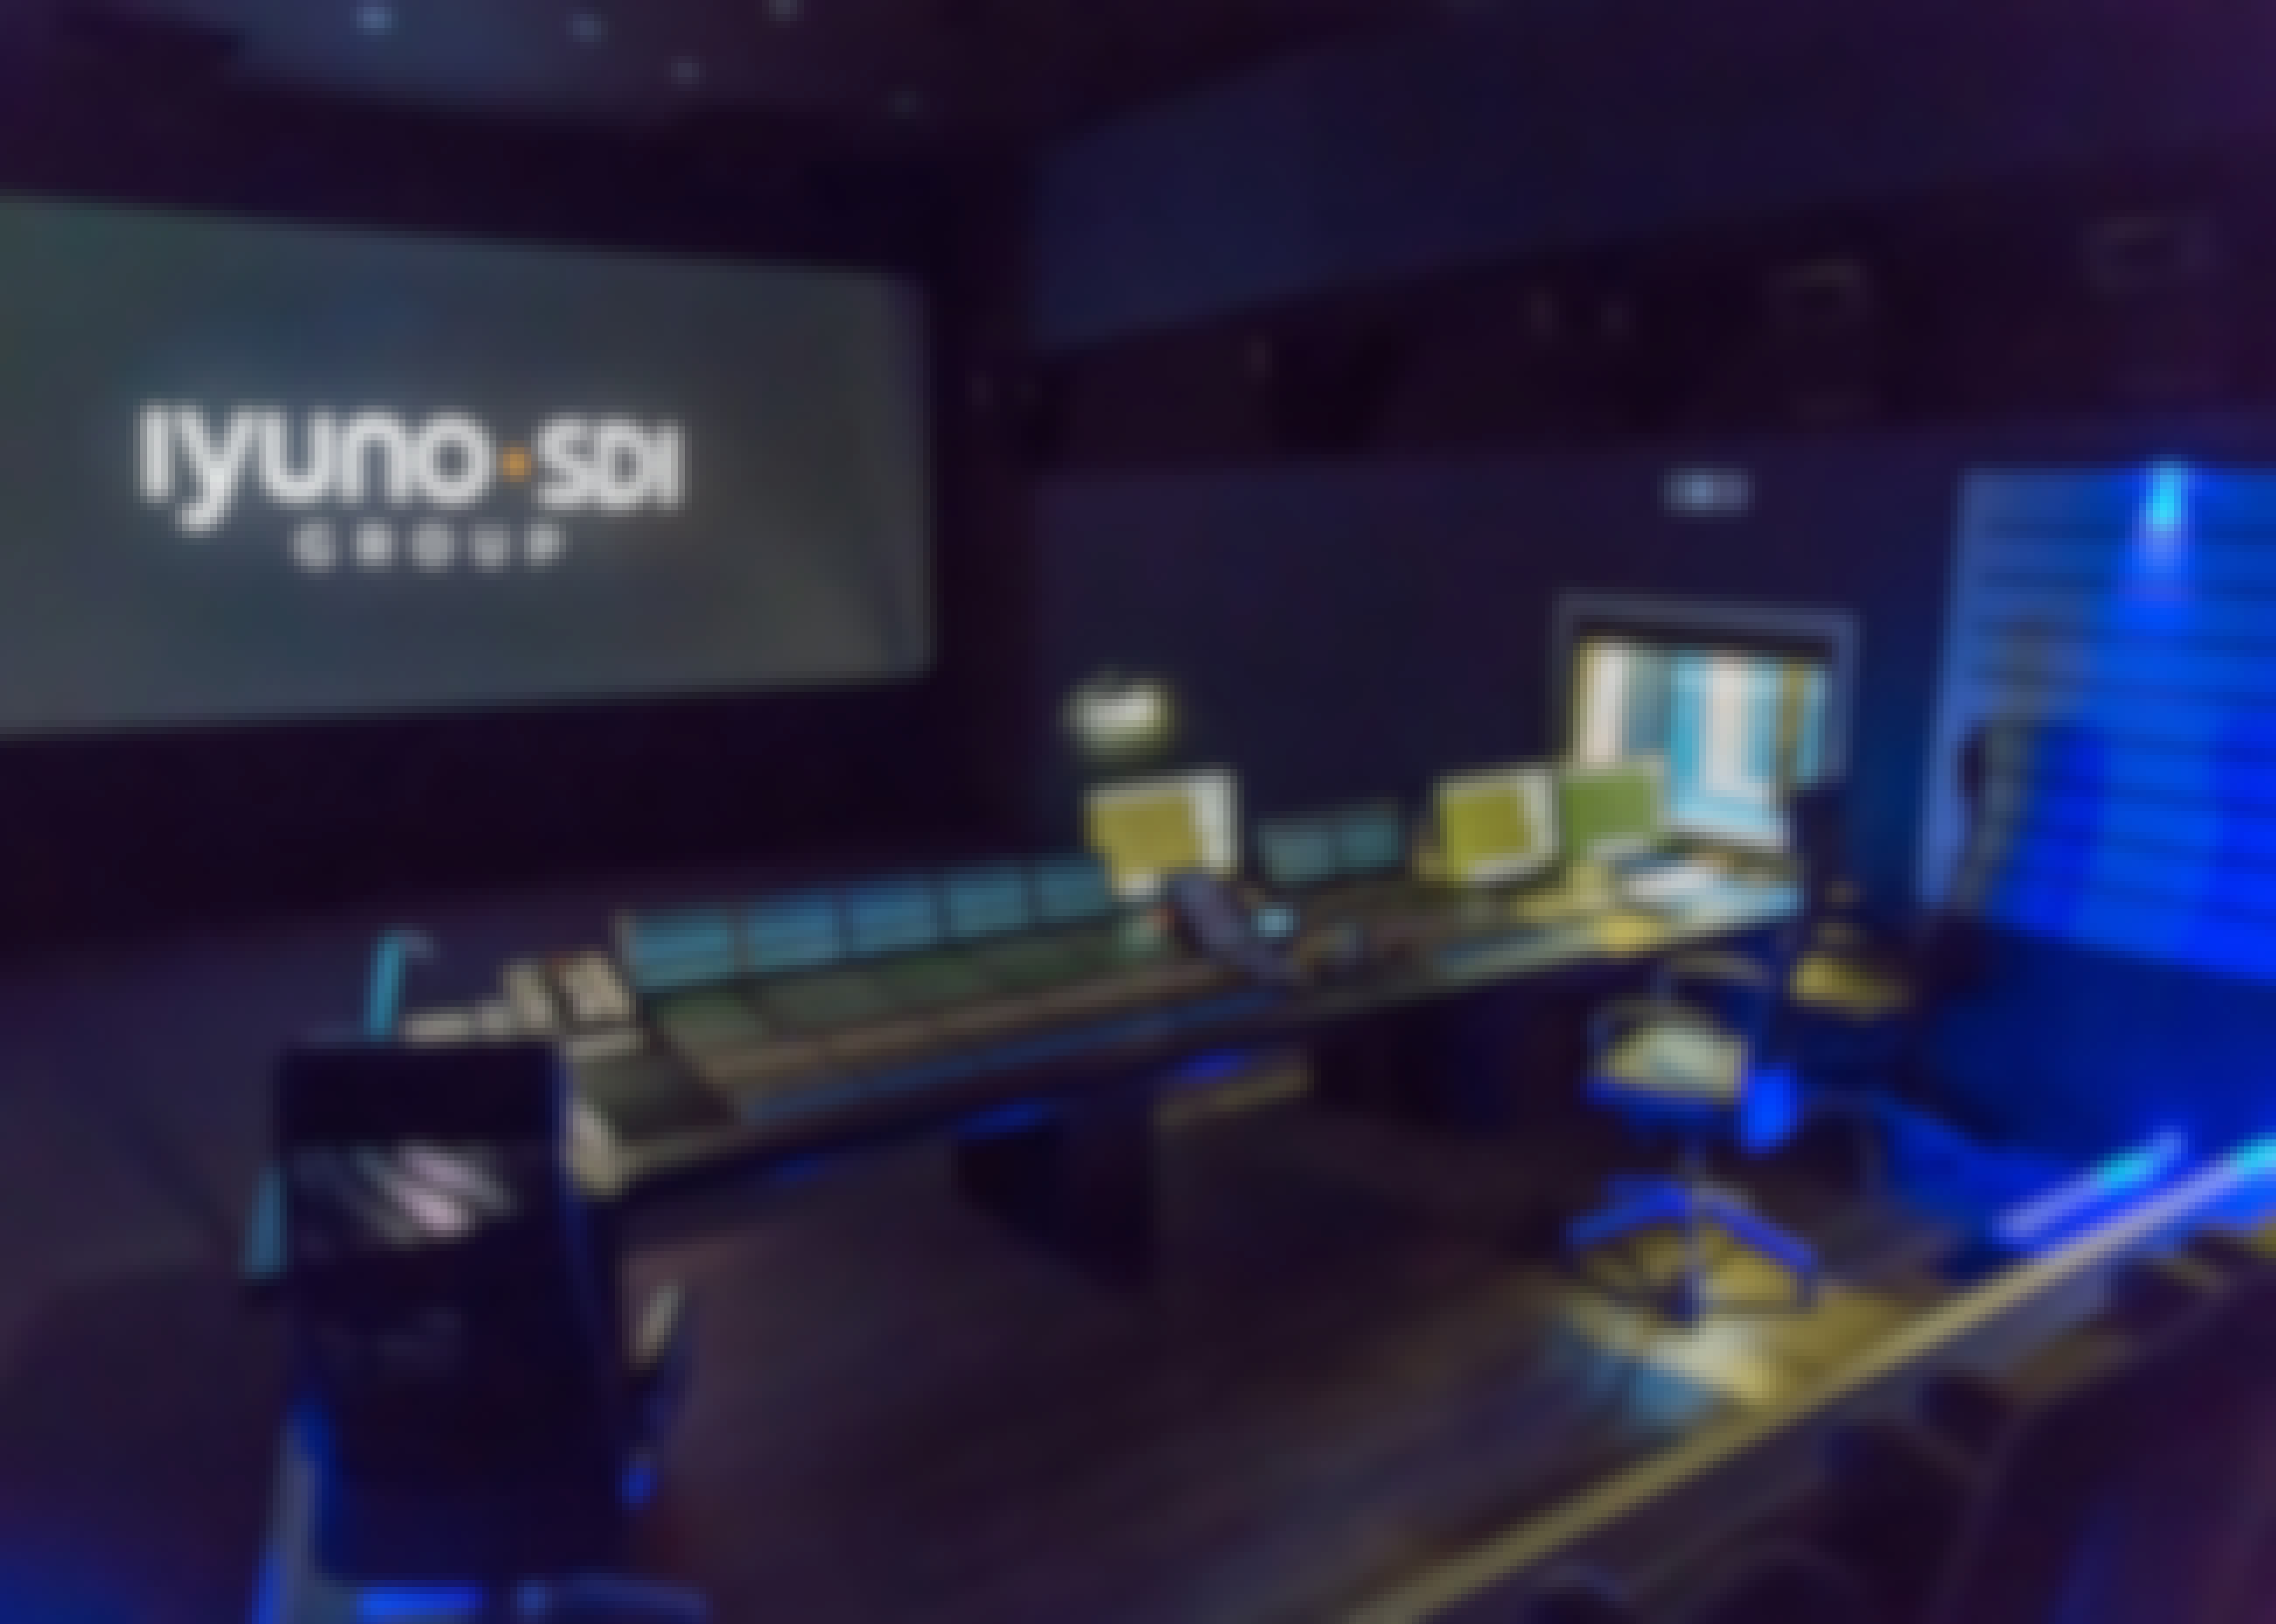 Iyuno-SDI Poland Studio